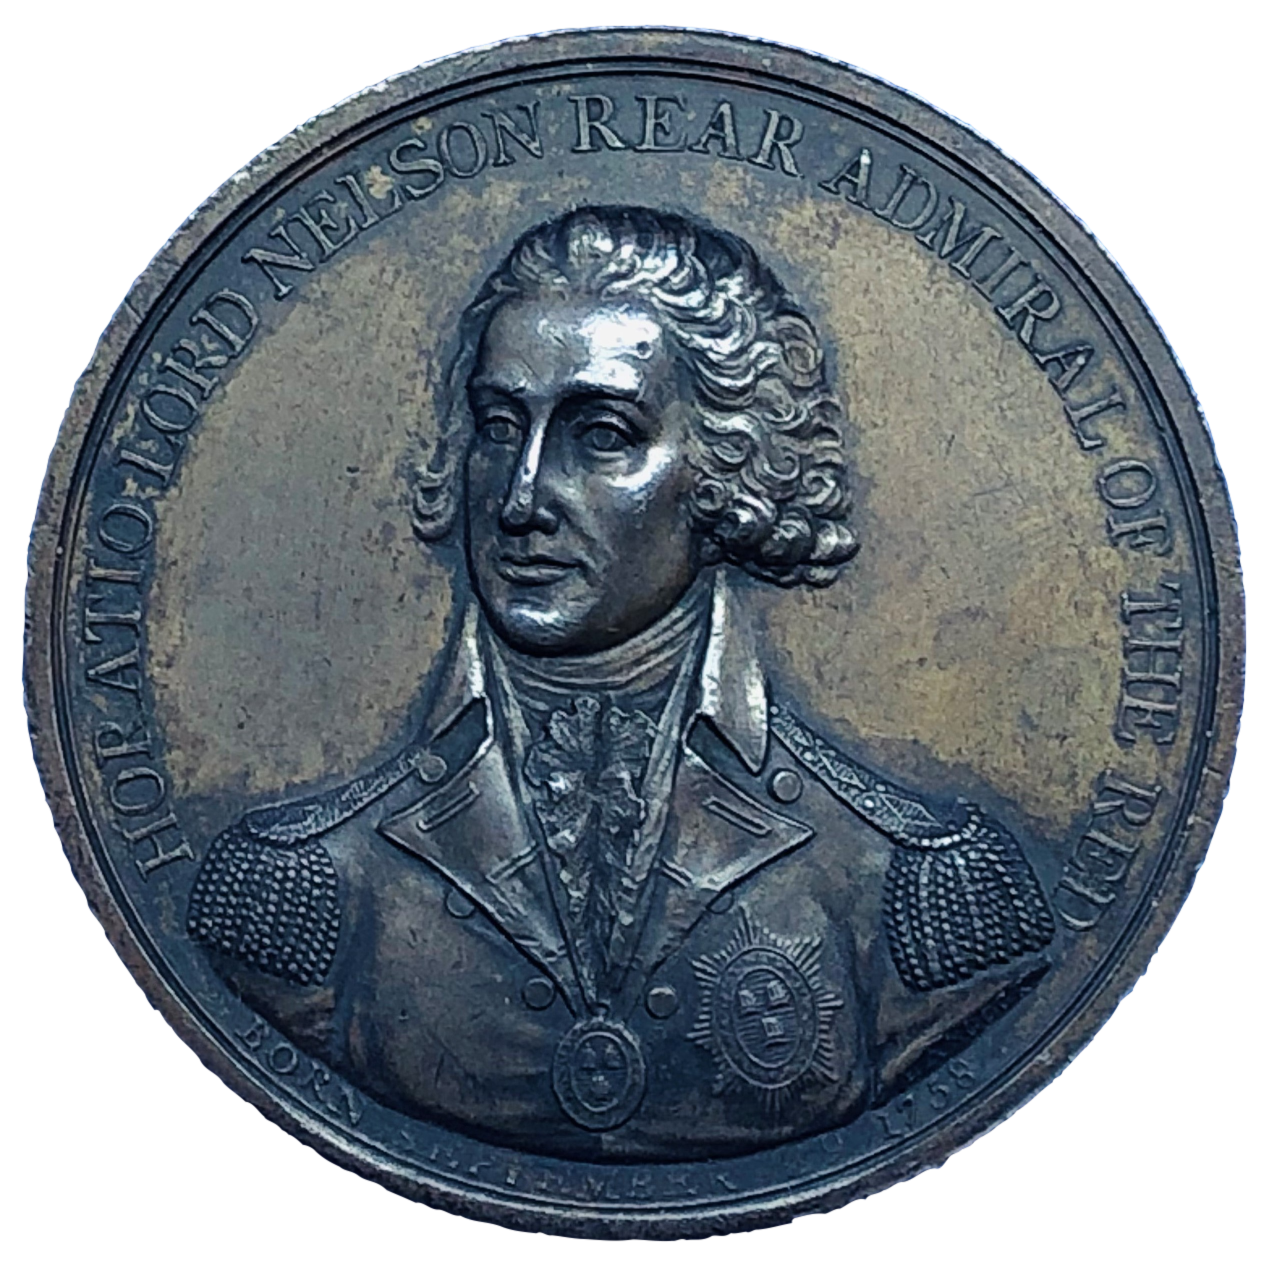 1798 Battle of the Nile Historical Medallion by J G Hancock/P Kempson Obverse